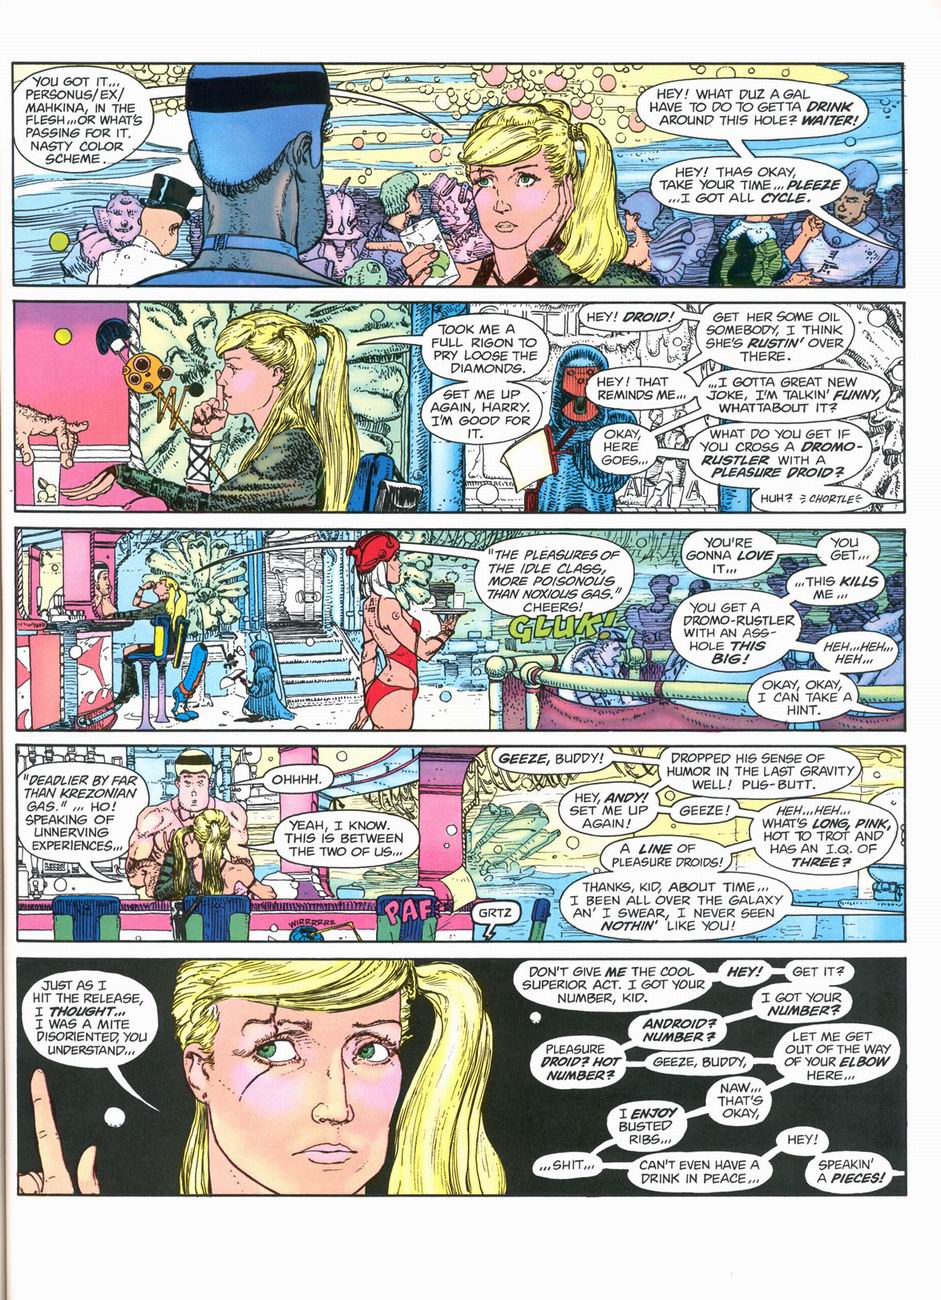 Marvel Graphic Novel issue 13 - Starstruck - Page 62